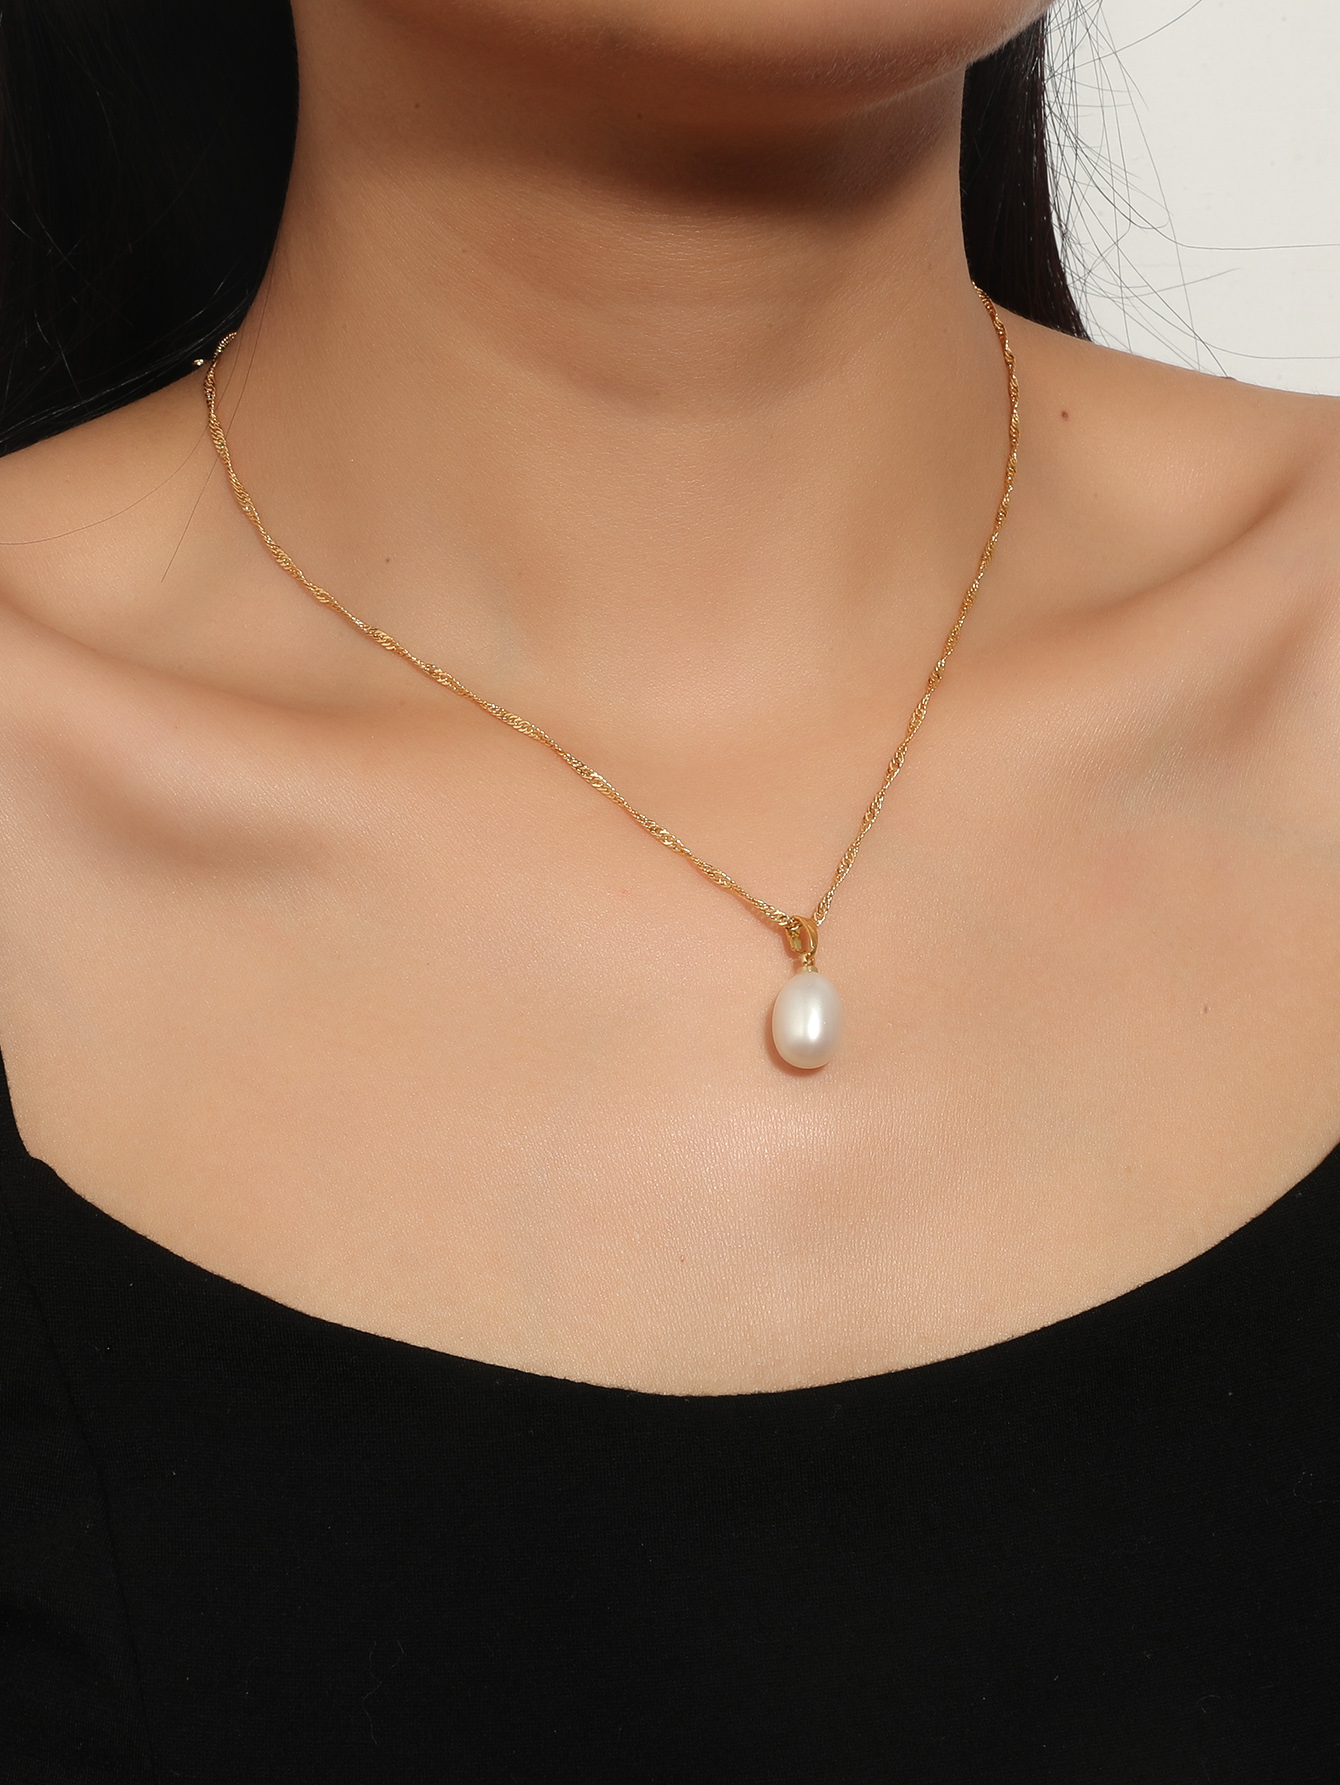 10pc_Stunning Gold Tone White Freshwater Pearl Pendant Necklace_UK Seller_GCJ222